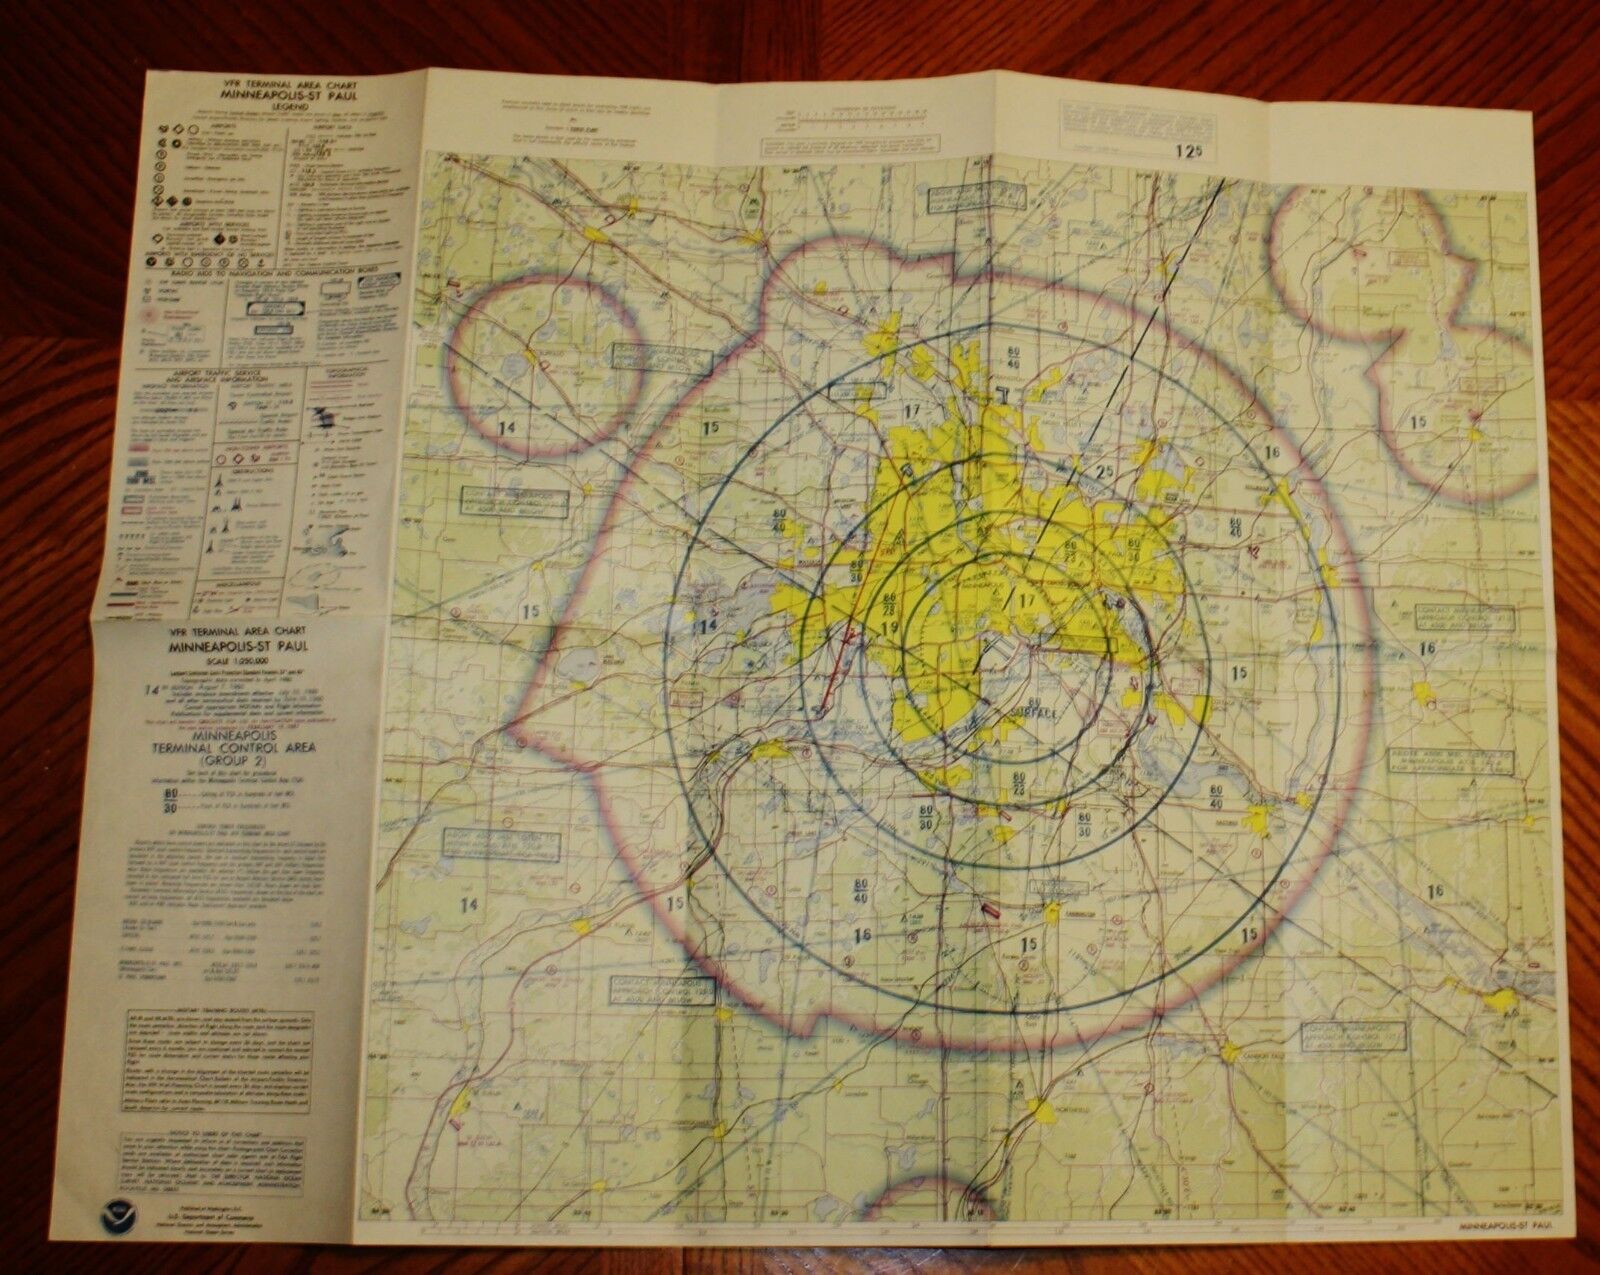 2 Minneapolis Terminal Control Area Aeronautical VFR Chart Map 1980-81 1:250,000